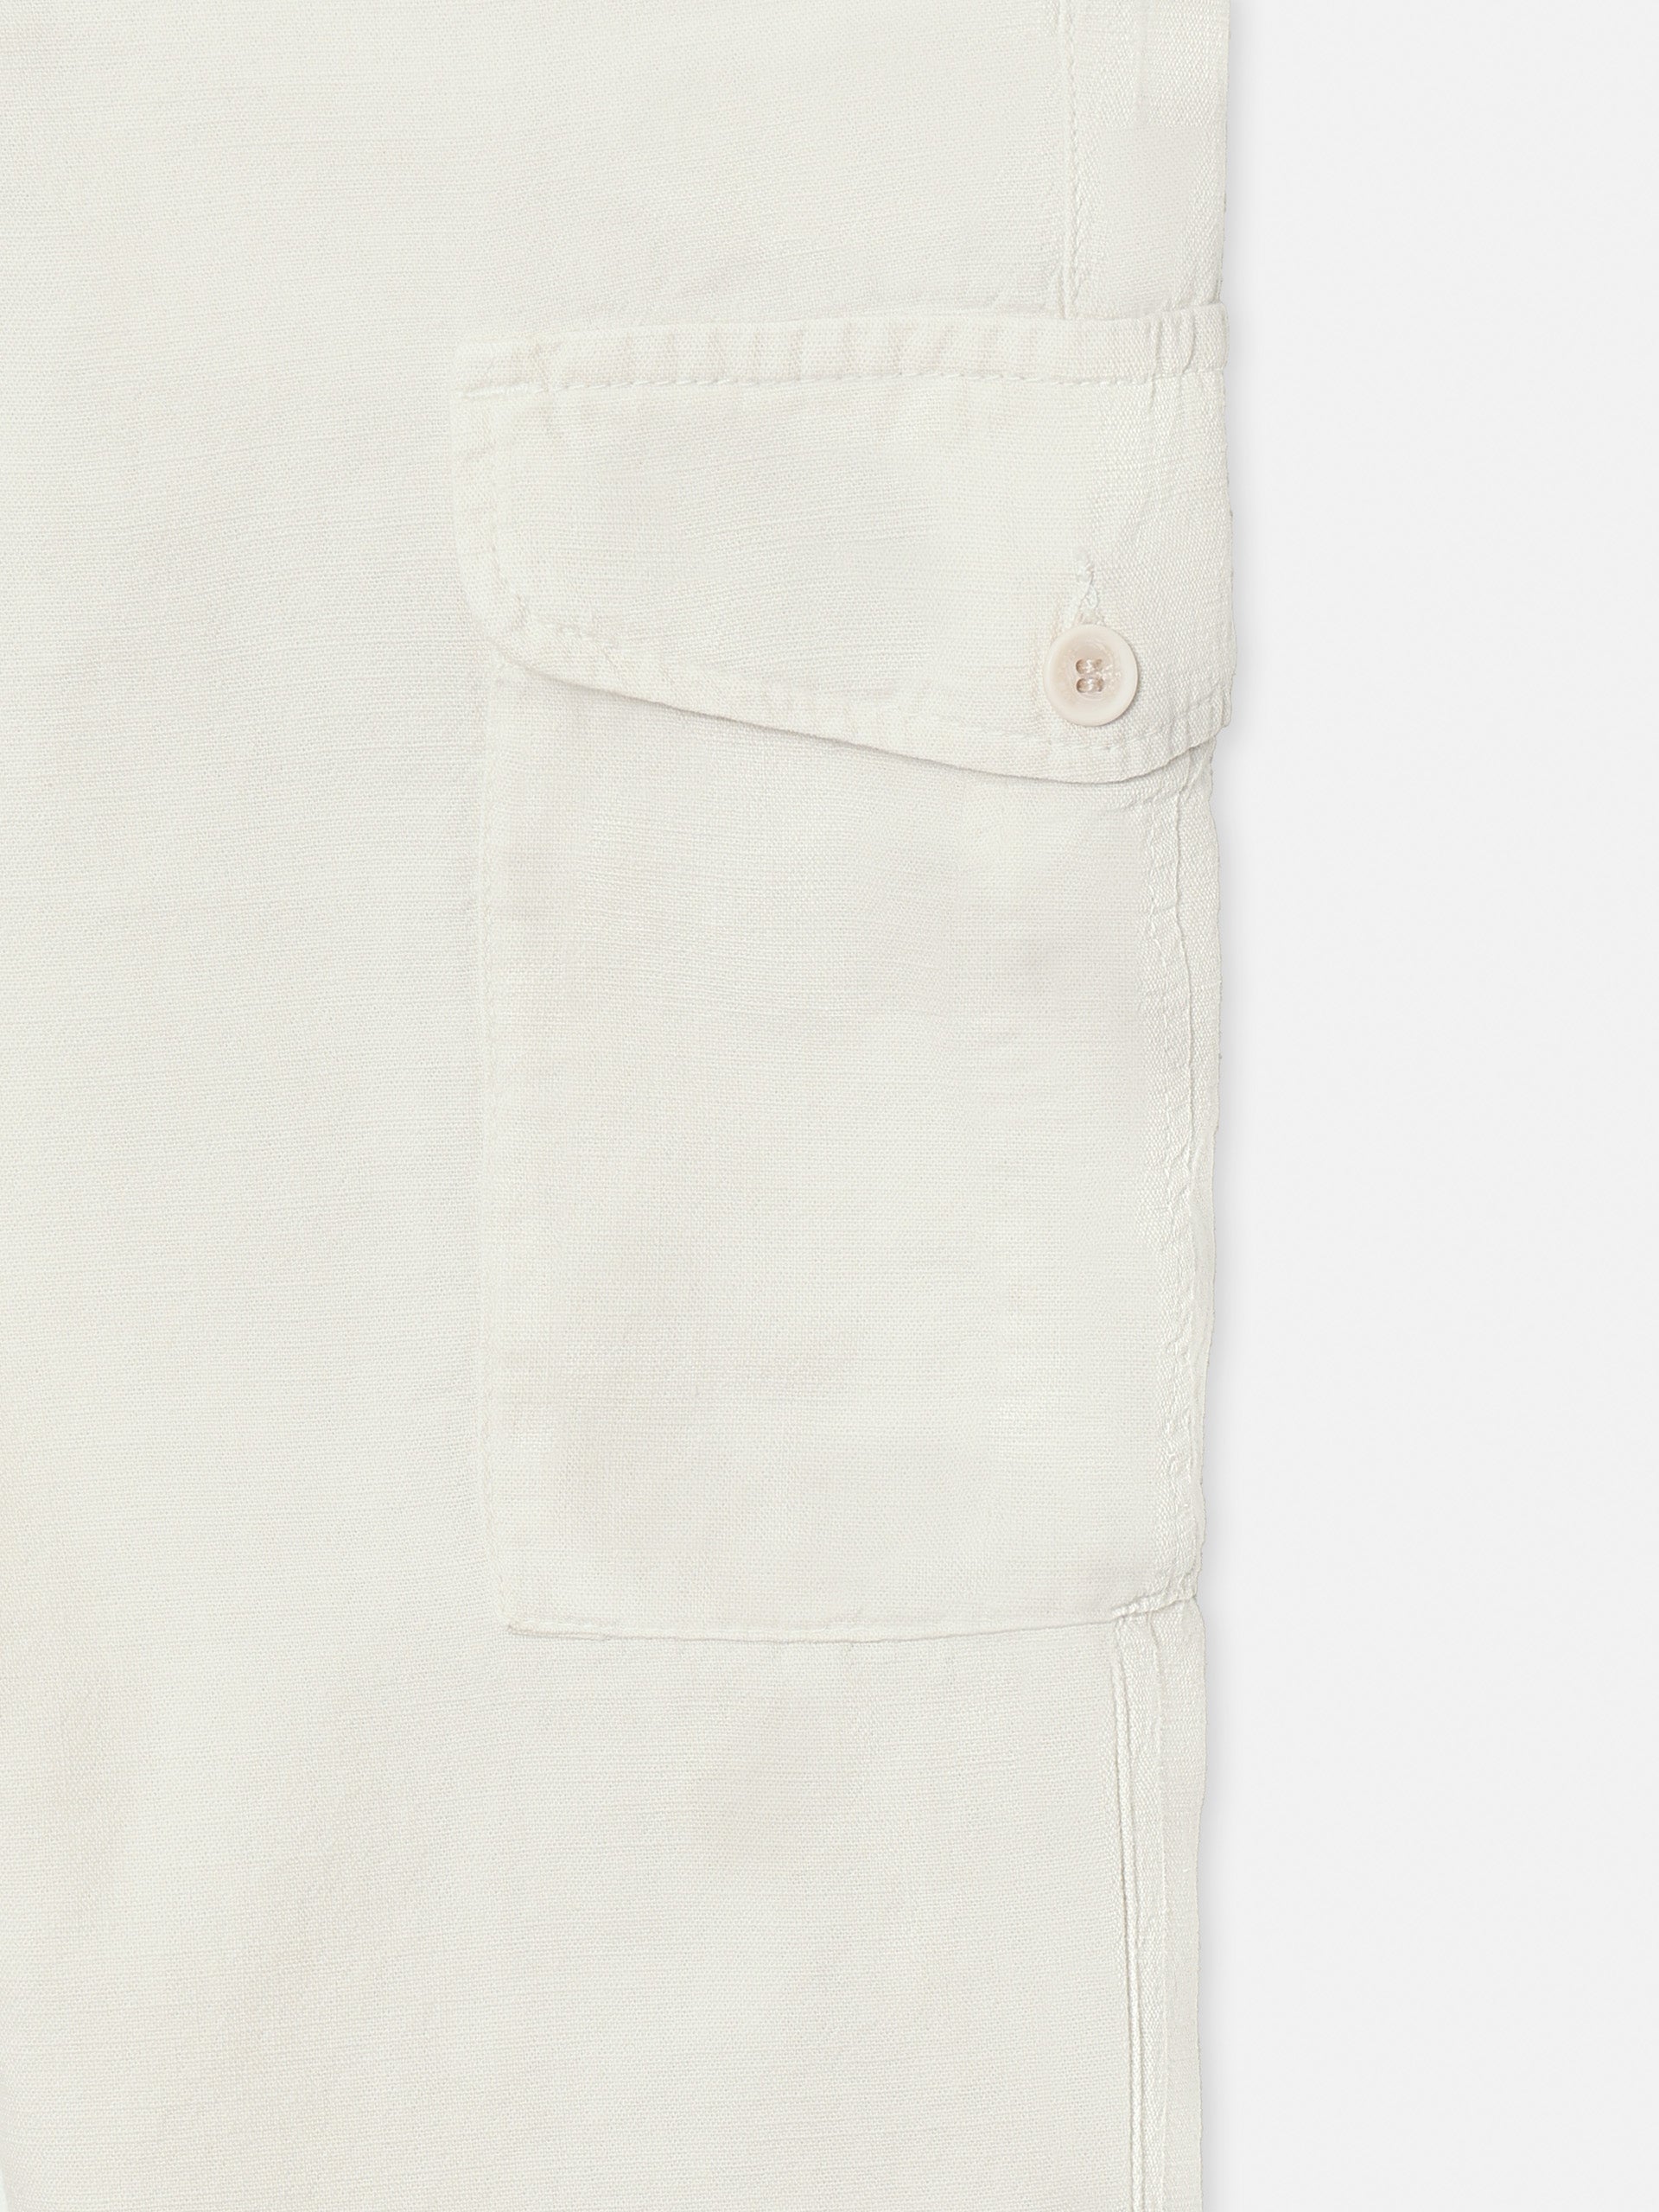 Pantalon sport cargo lino beige claro